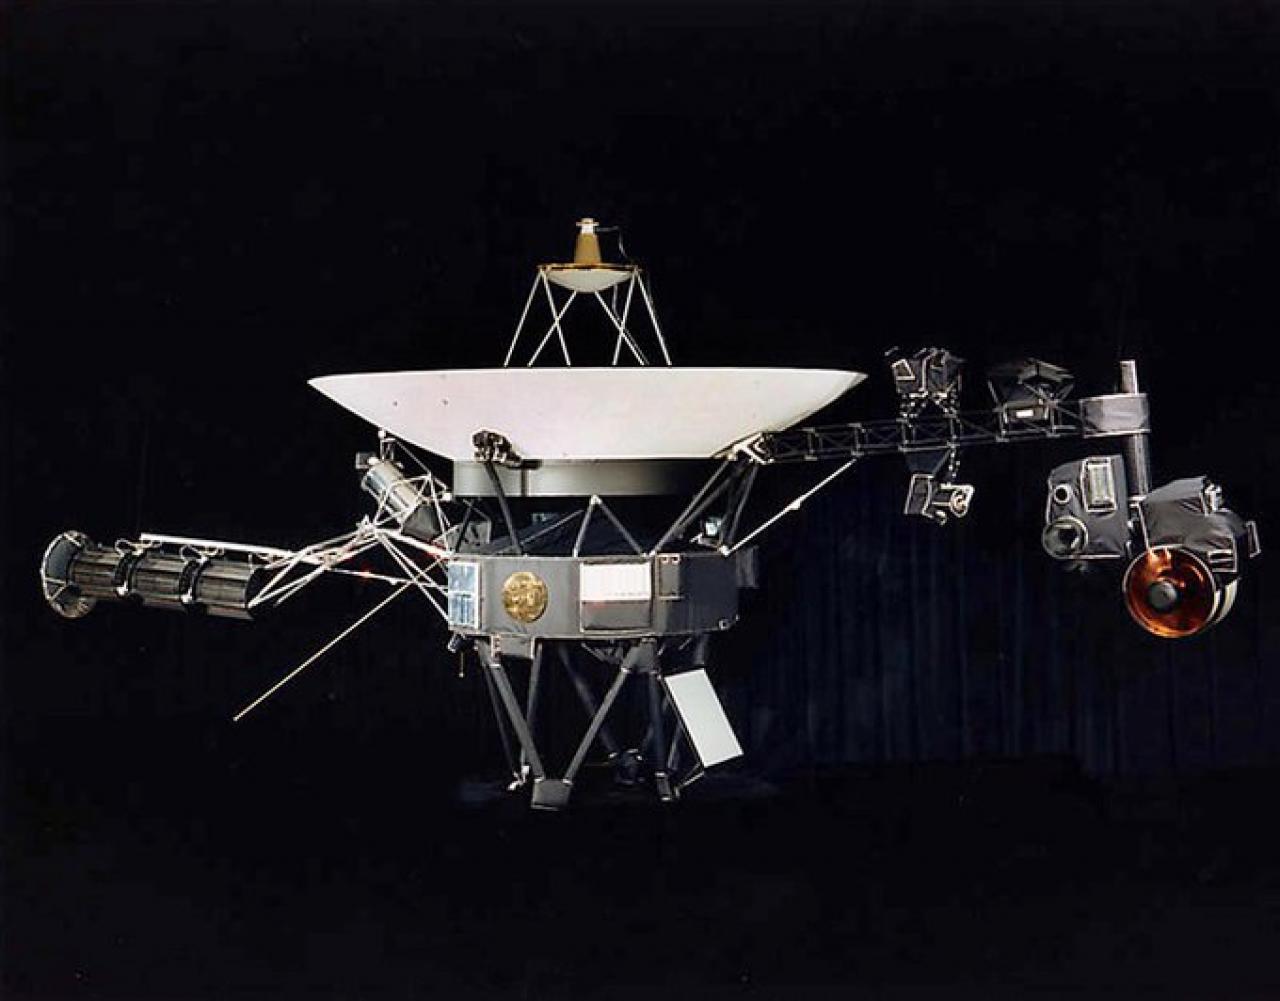 La Voyager 2